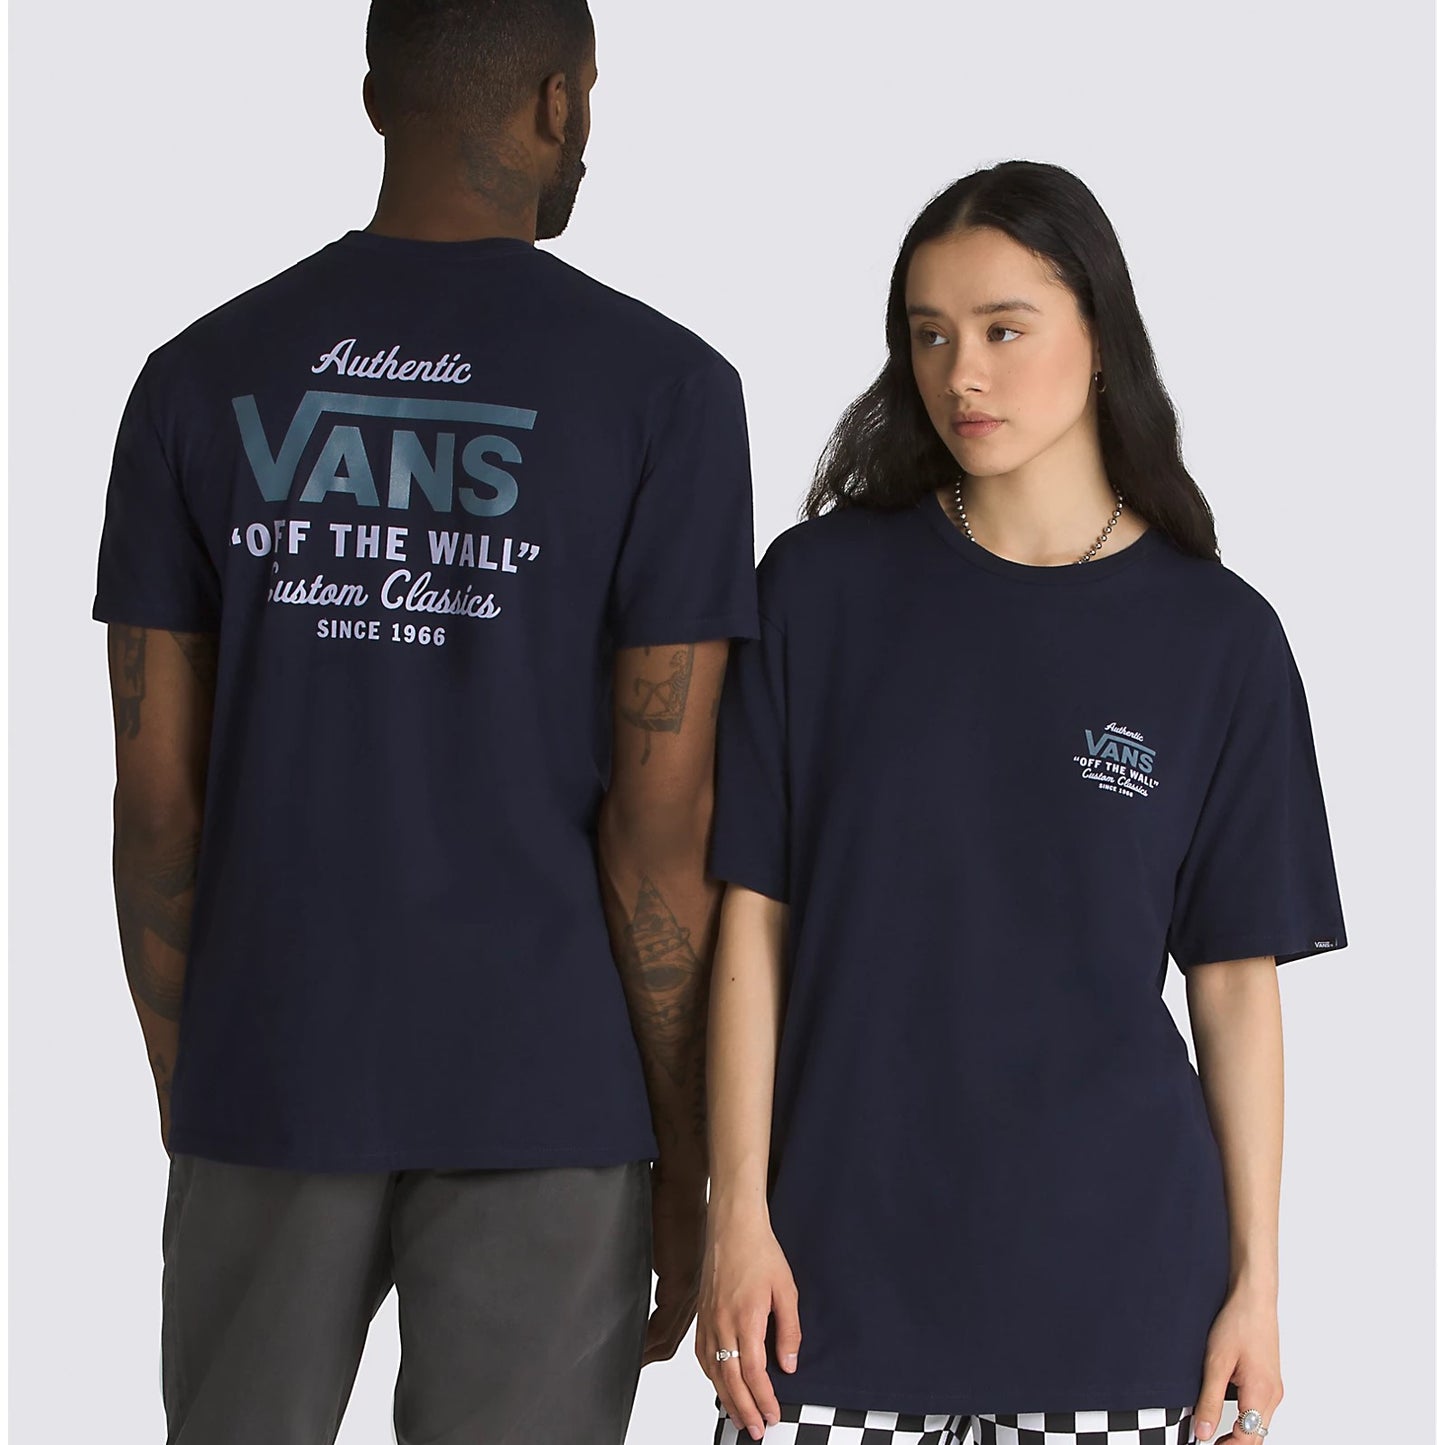 VANS Holder St Classic T-Shirt - Navy